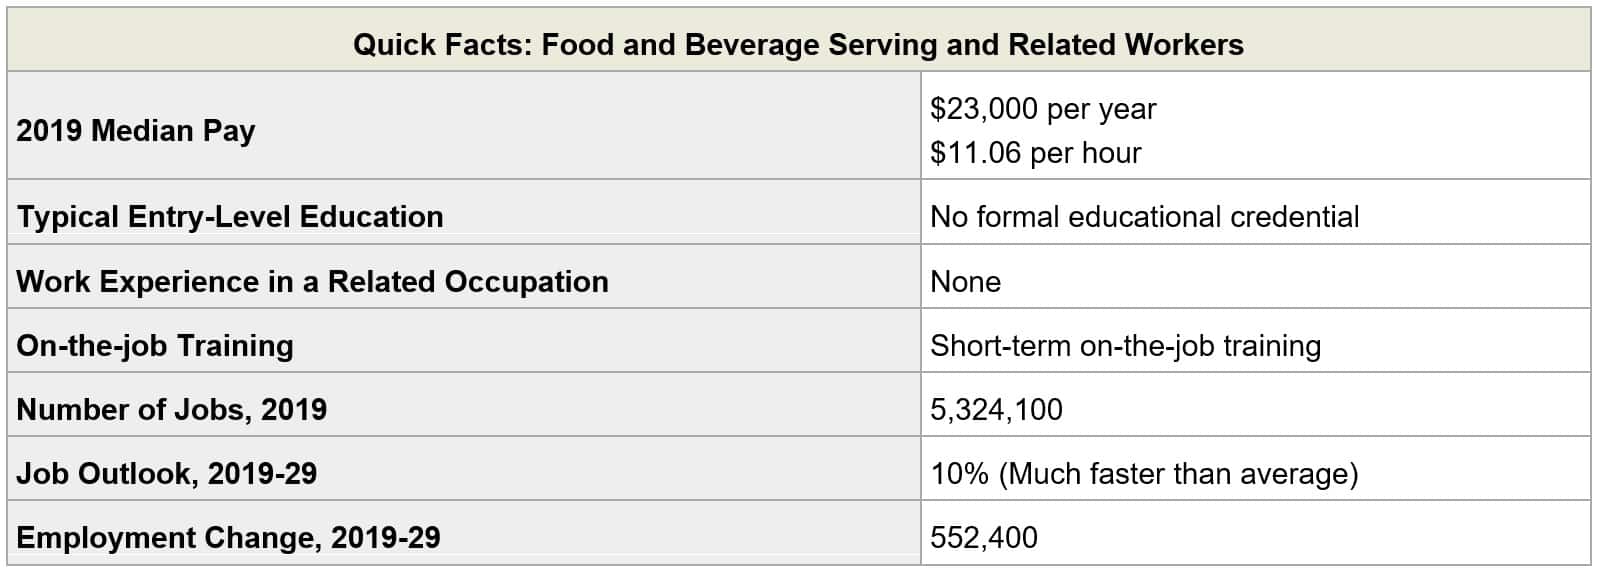 brewery business employment data